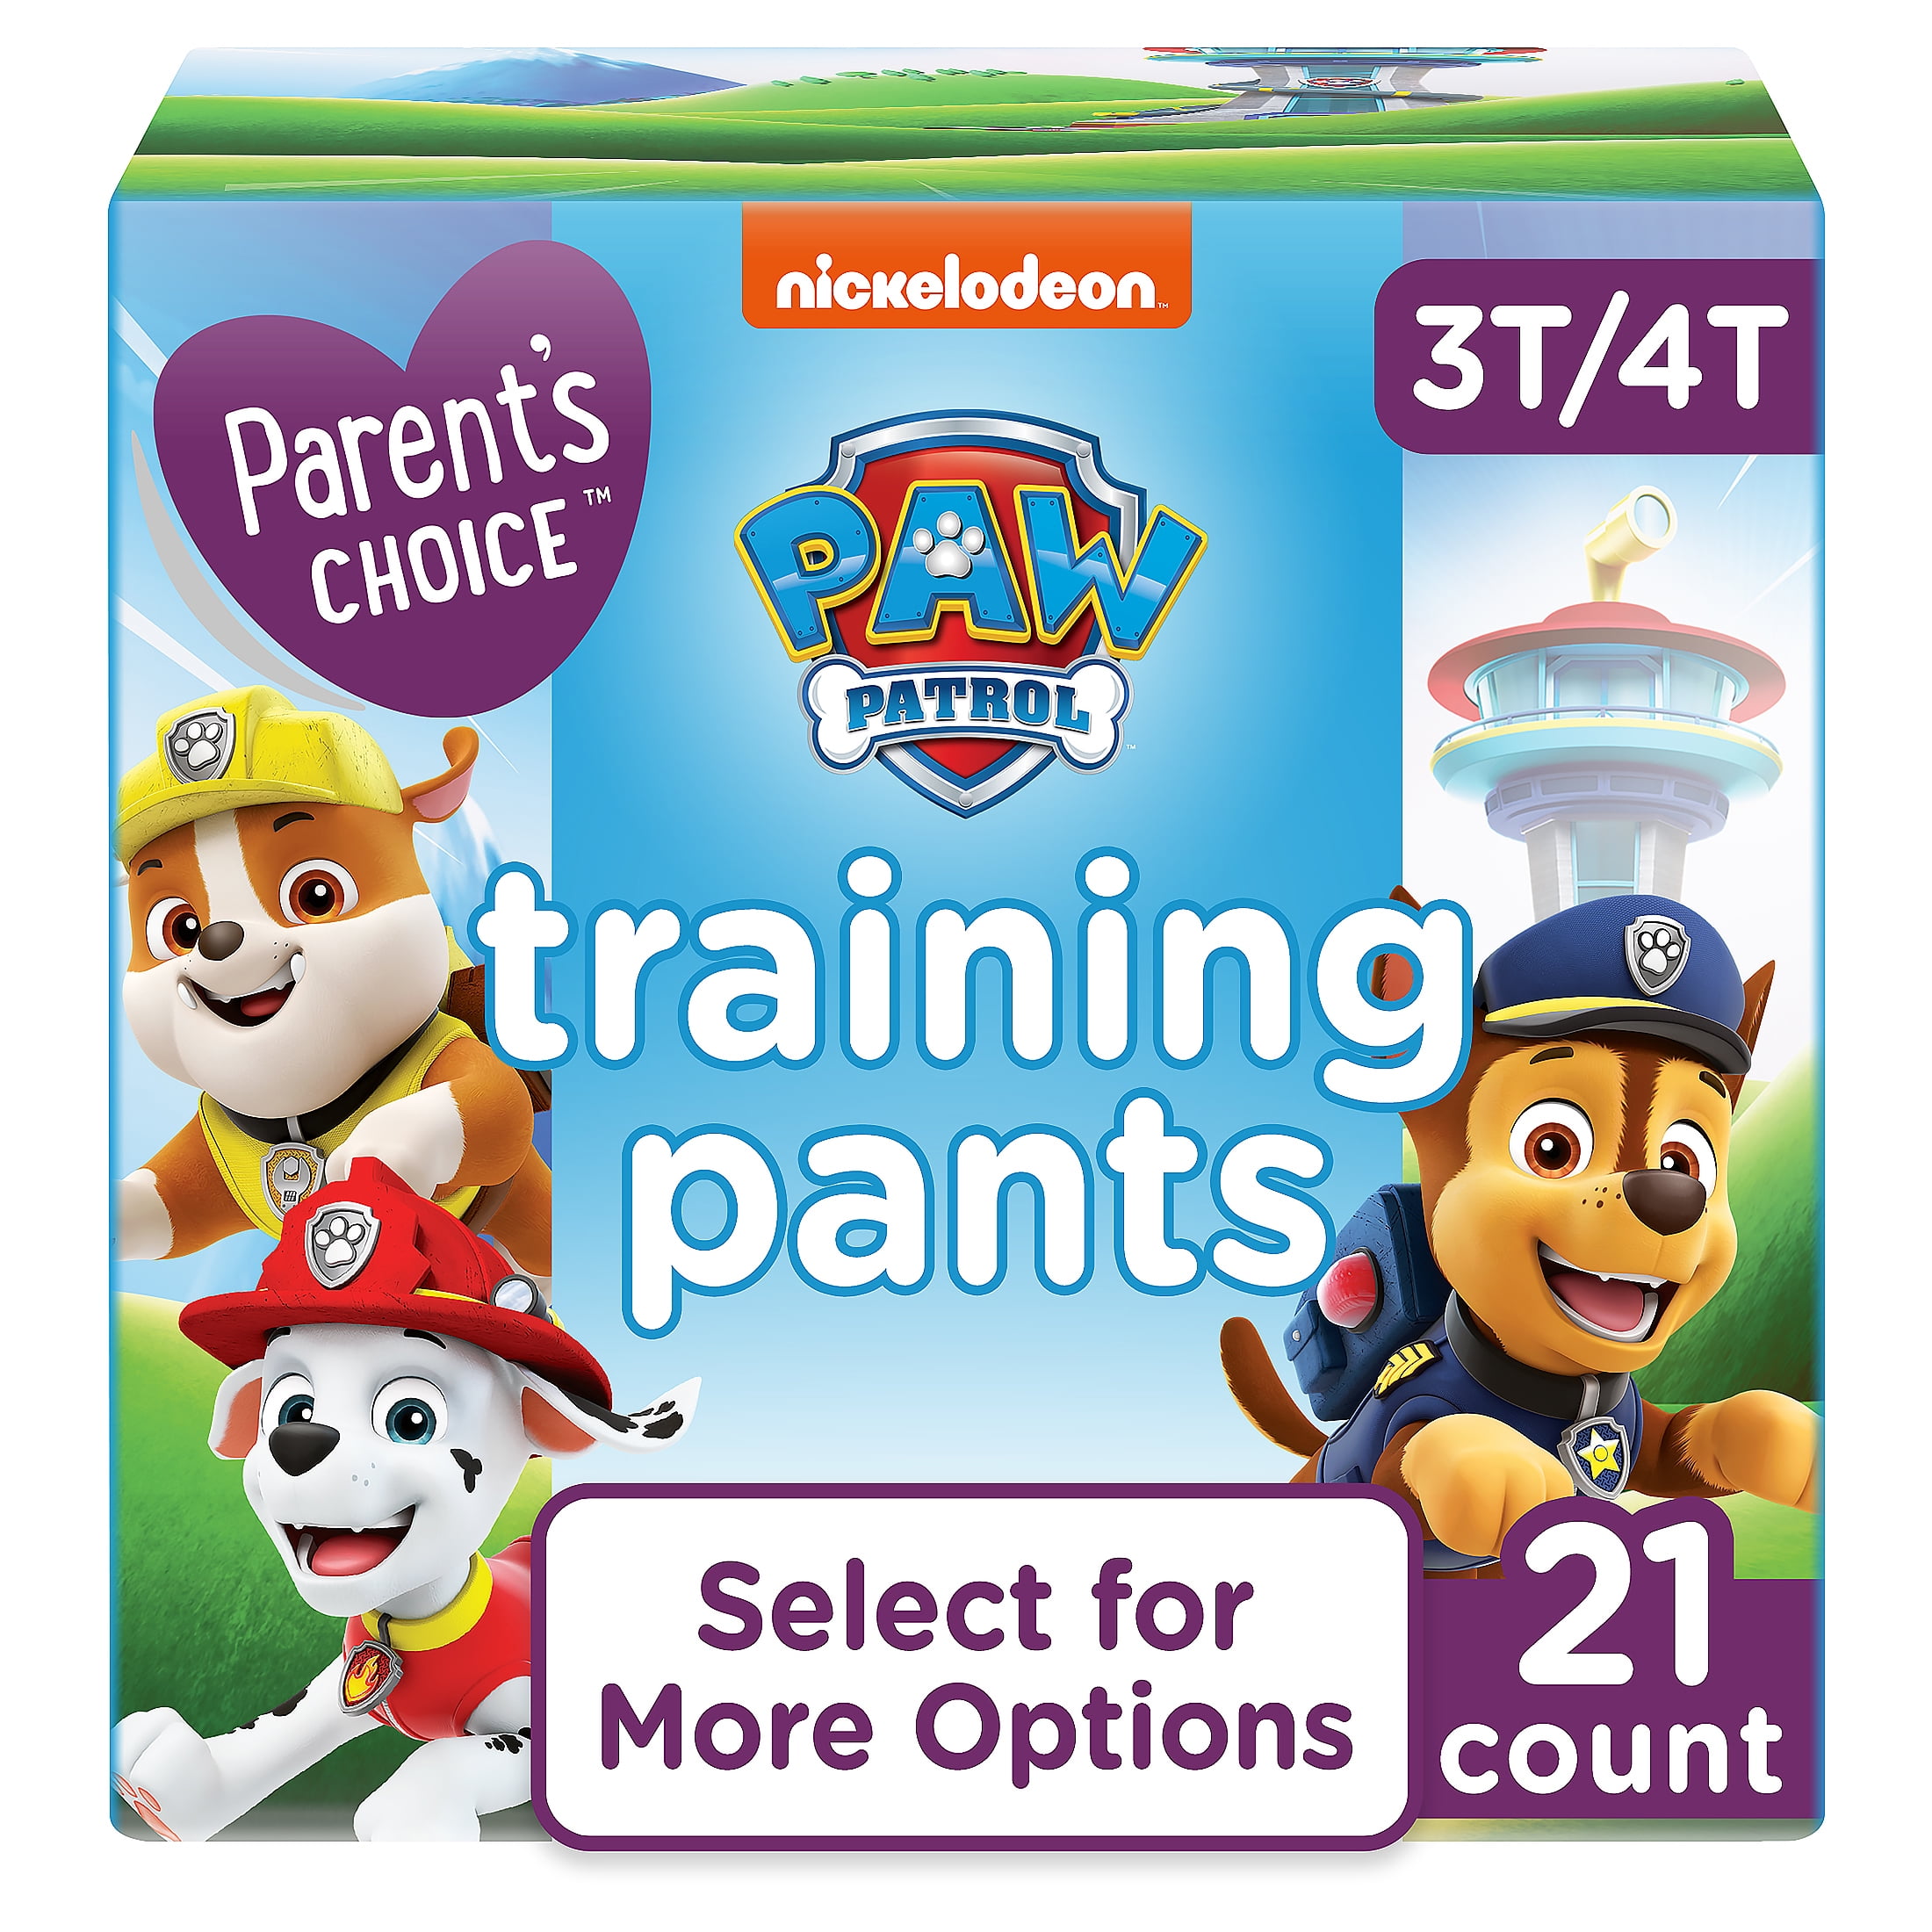 Paw Patrol Training Pants for Boys (3T/4T) Lt Blue/White